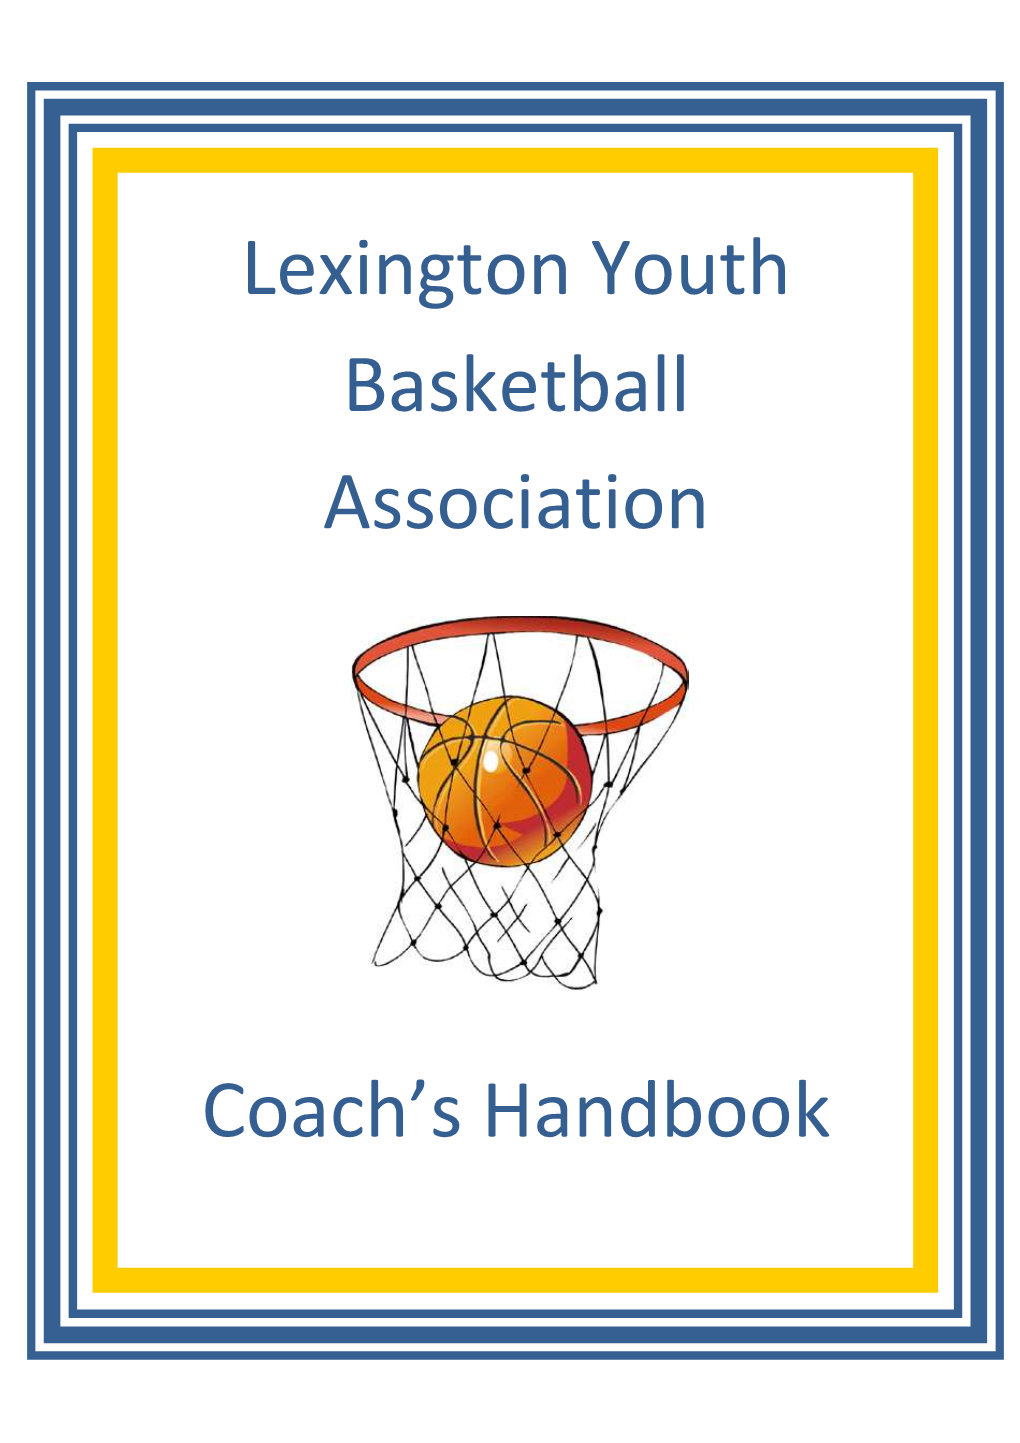 Lexington Youth Basketball Association Coach's Handbook